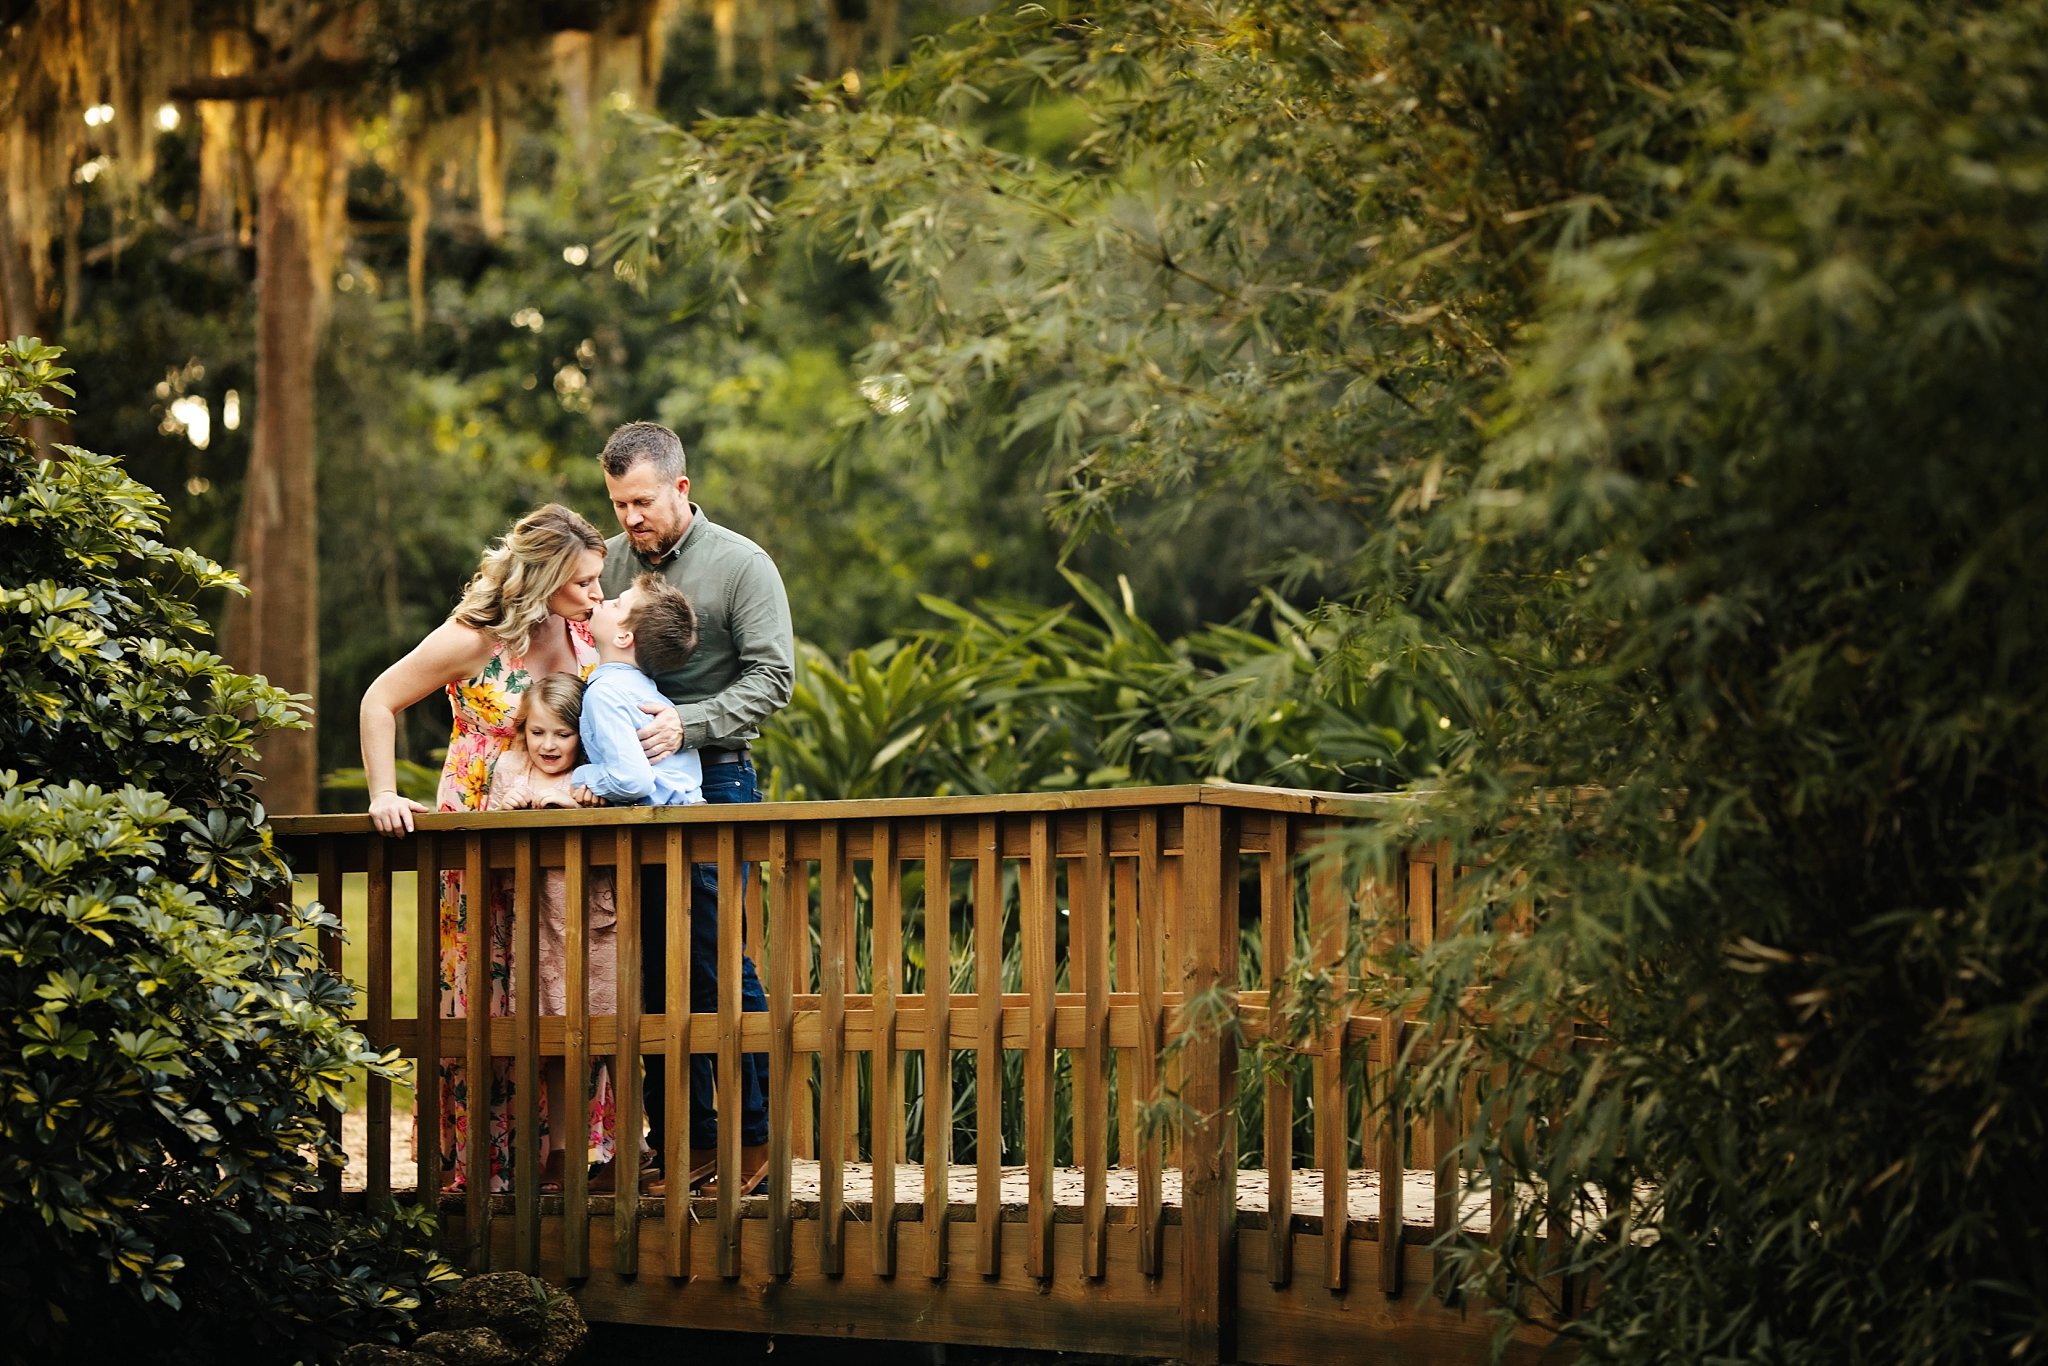 St Augustine Maternity Photographer Washington Oaks Gardens State Park family of 4 standing on small bridge